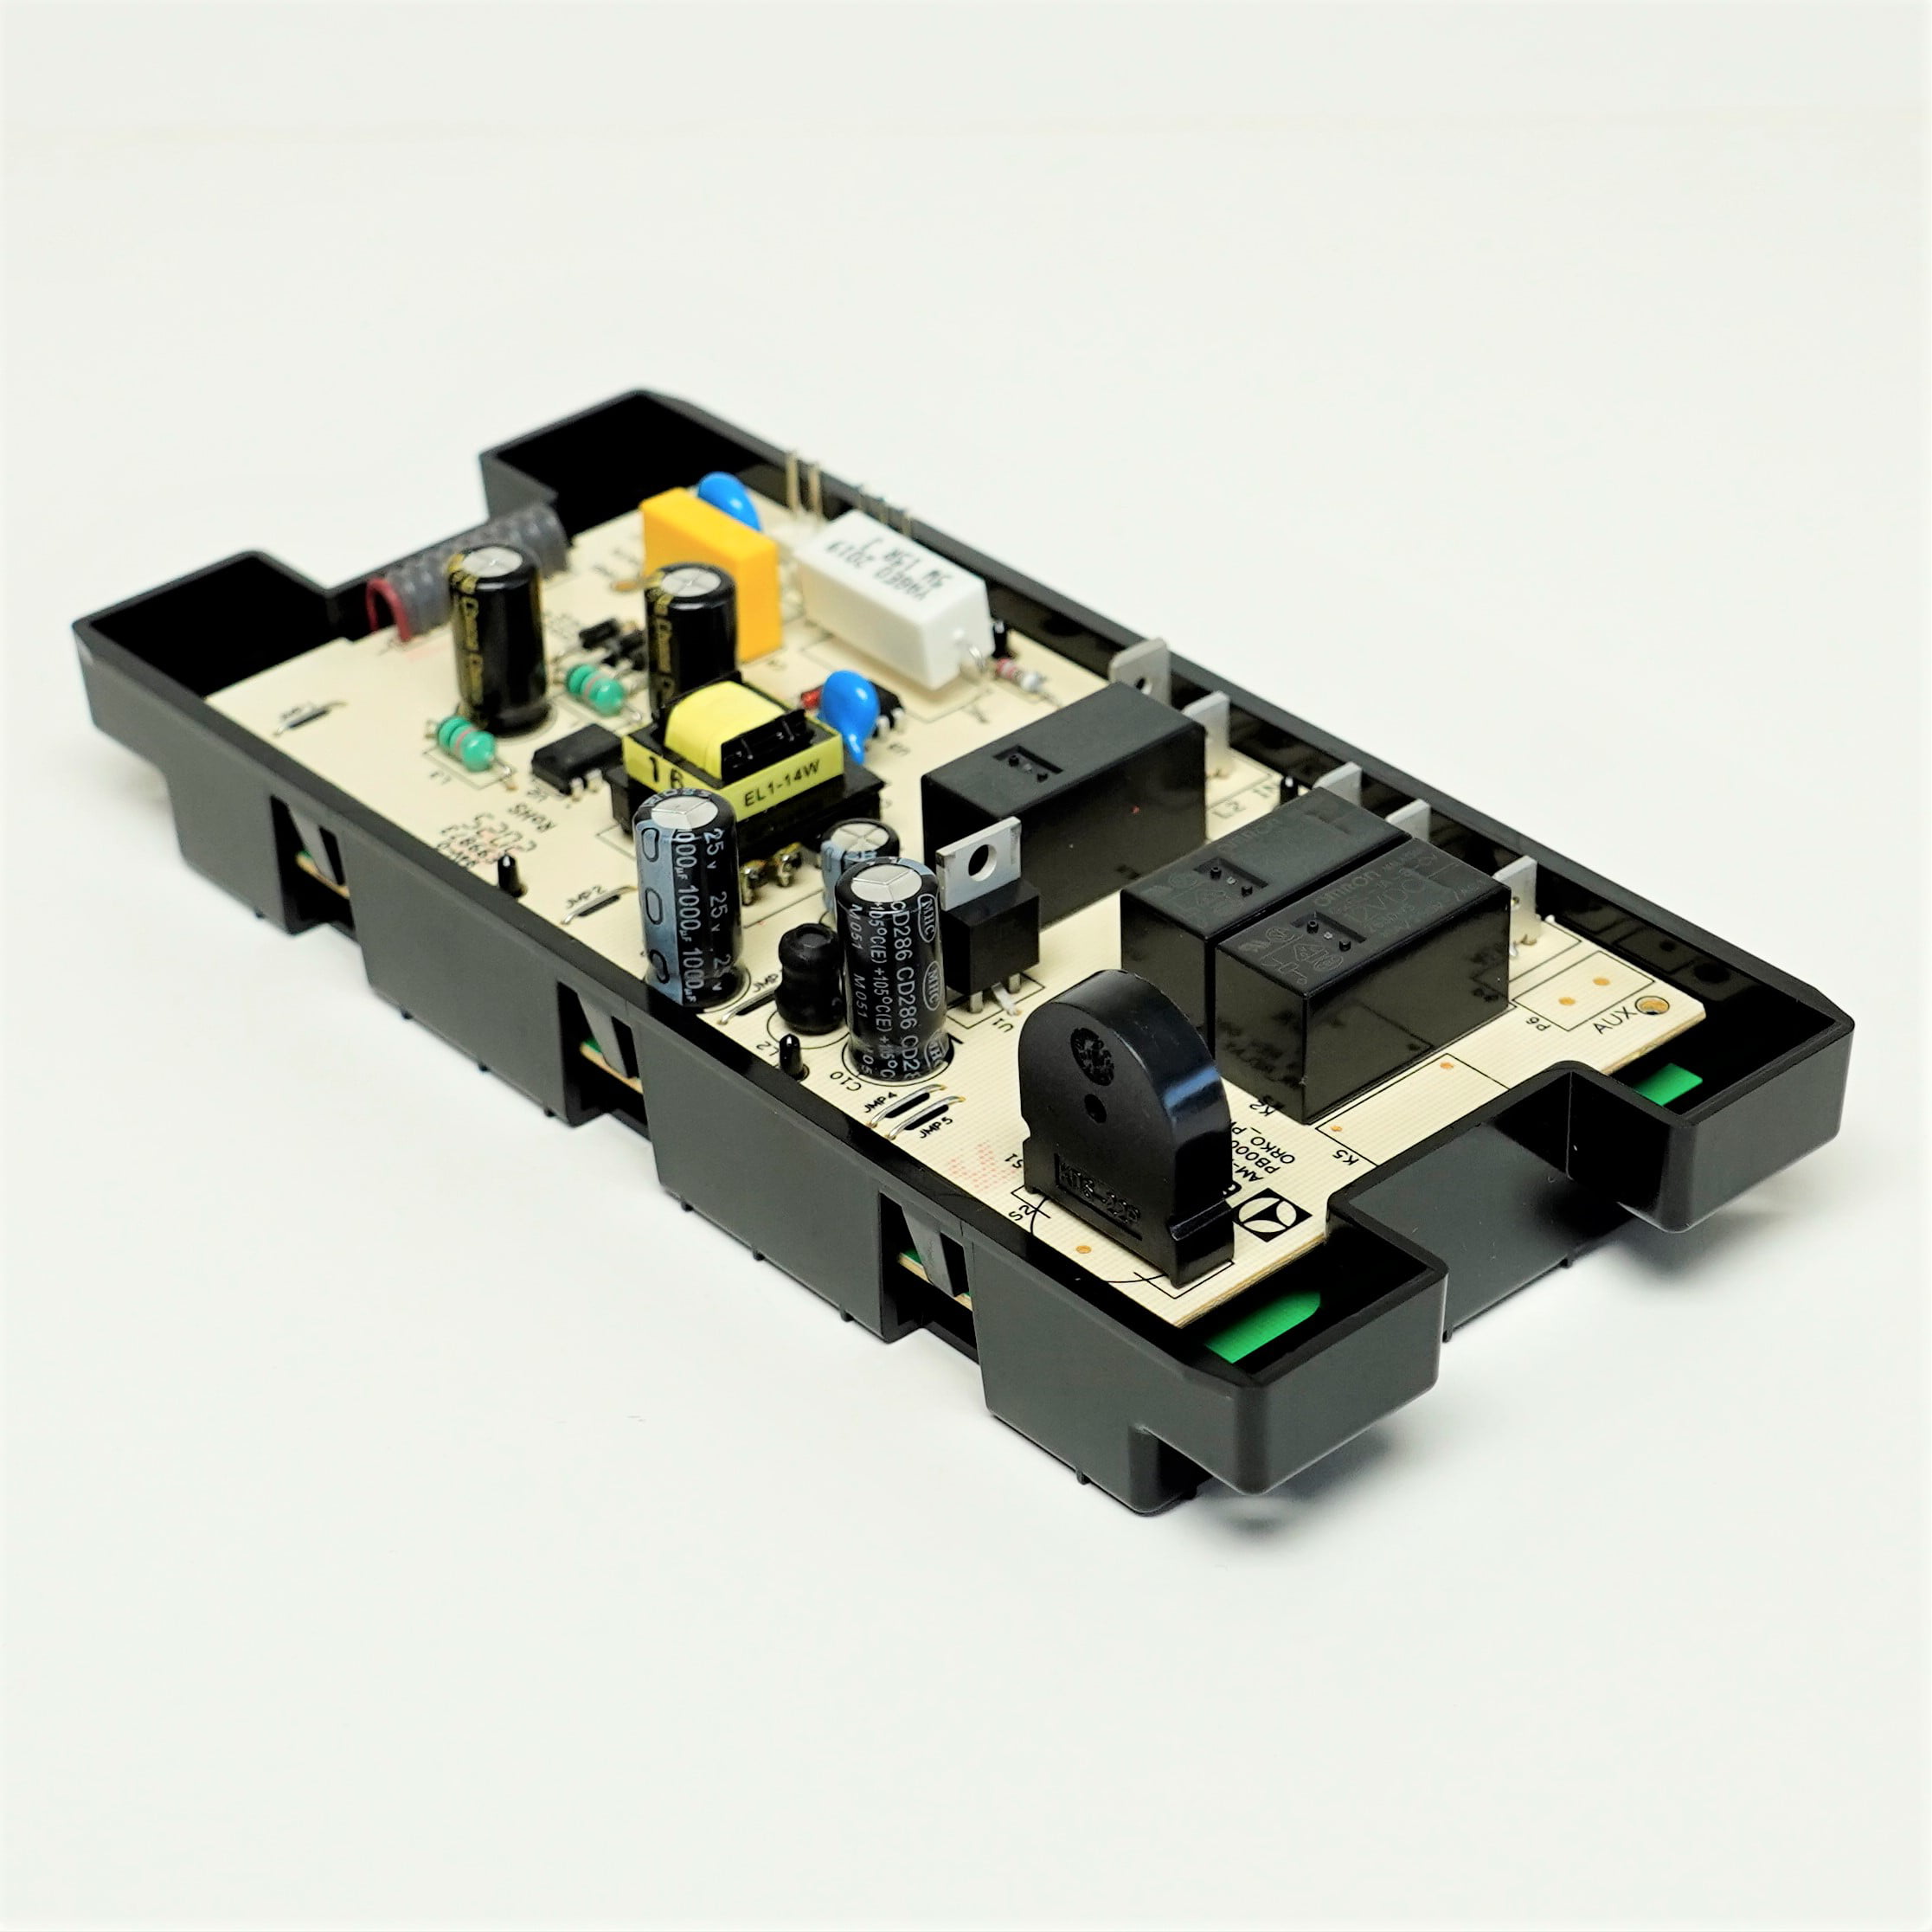 Frigidaire 5304518660 Range Oven Control Board Genuine OEM Part Brand New 